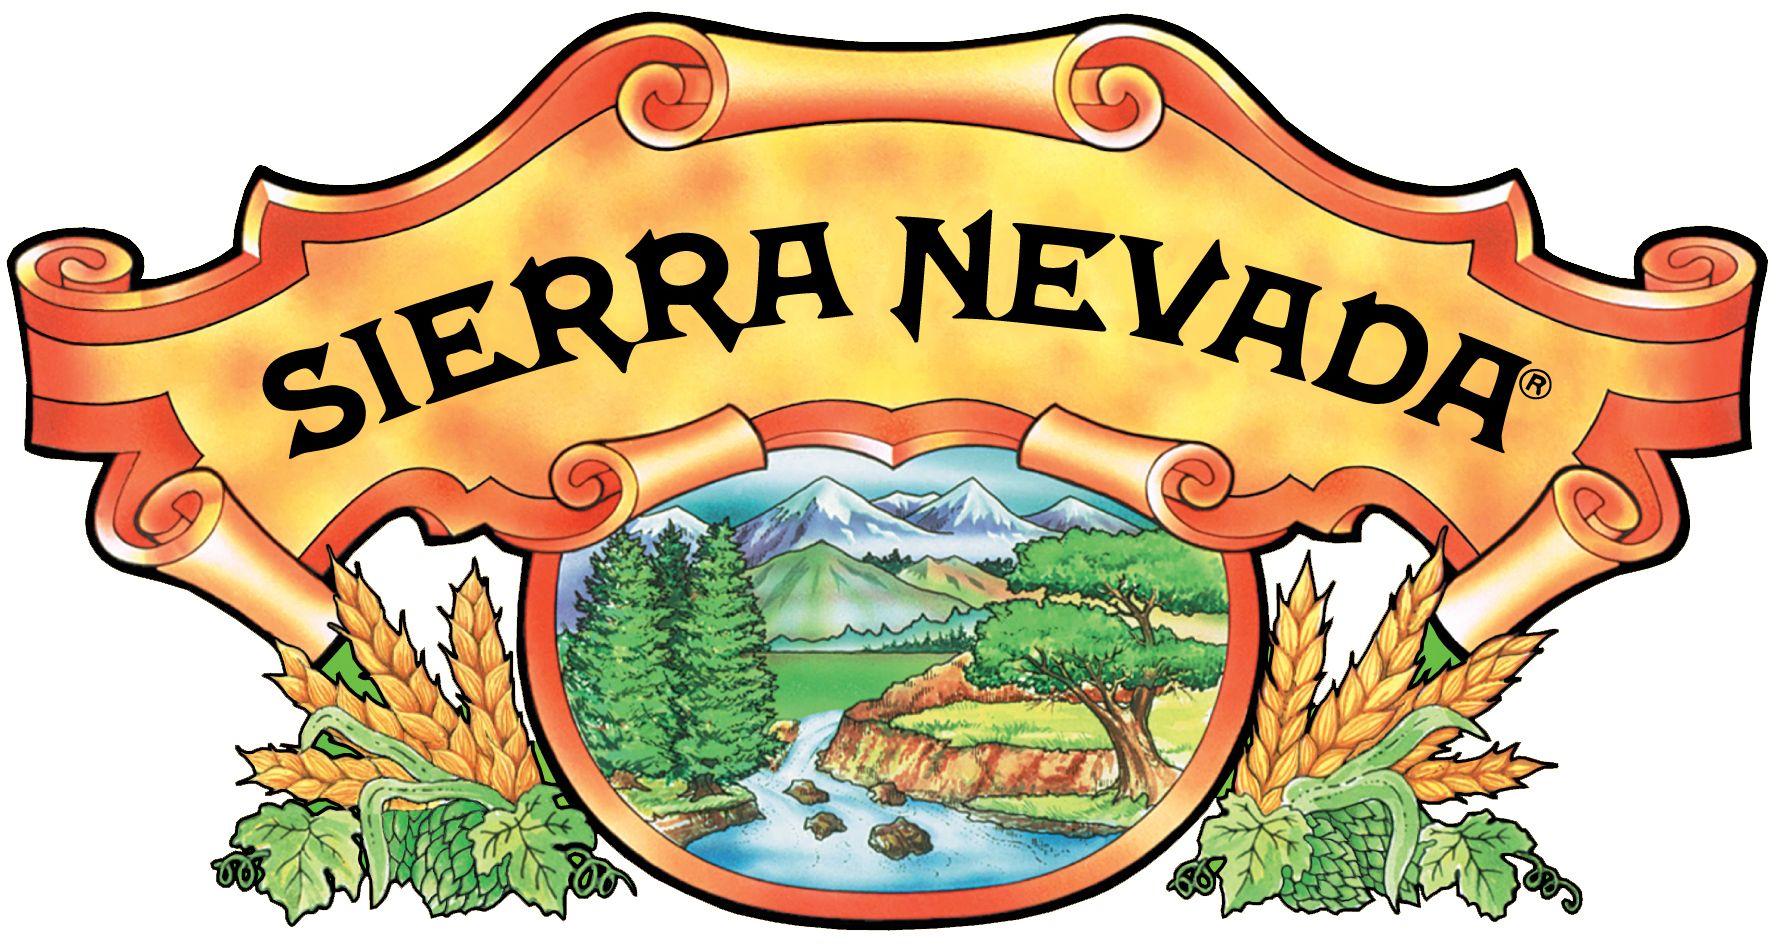 Sierra Nevada Beer Logo - Sierra Nevada Finds Rich Water Source | Independent Beers